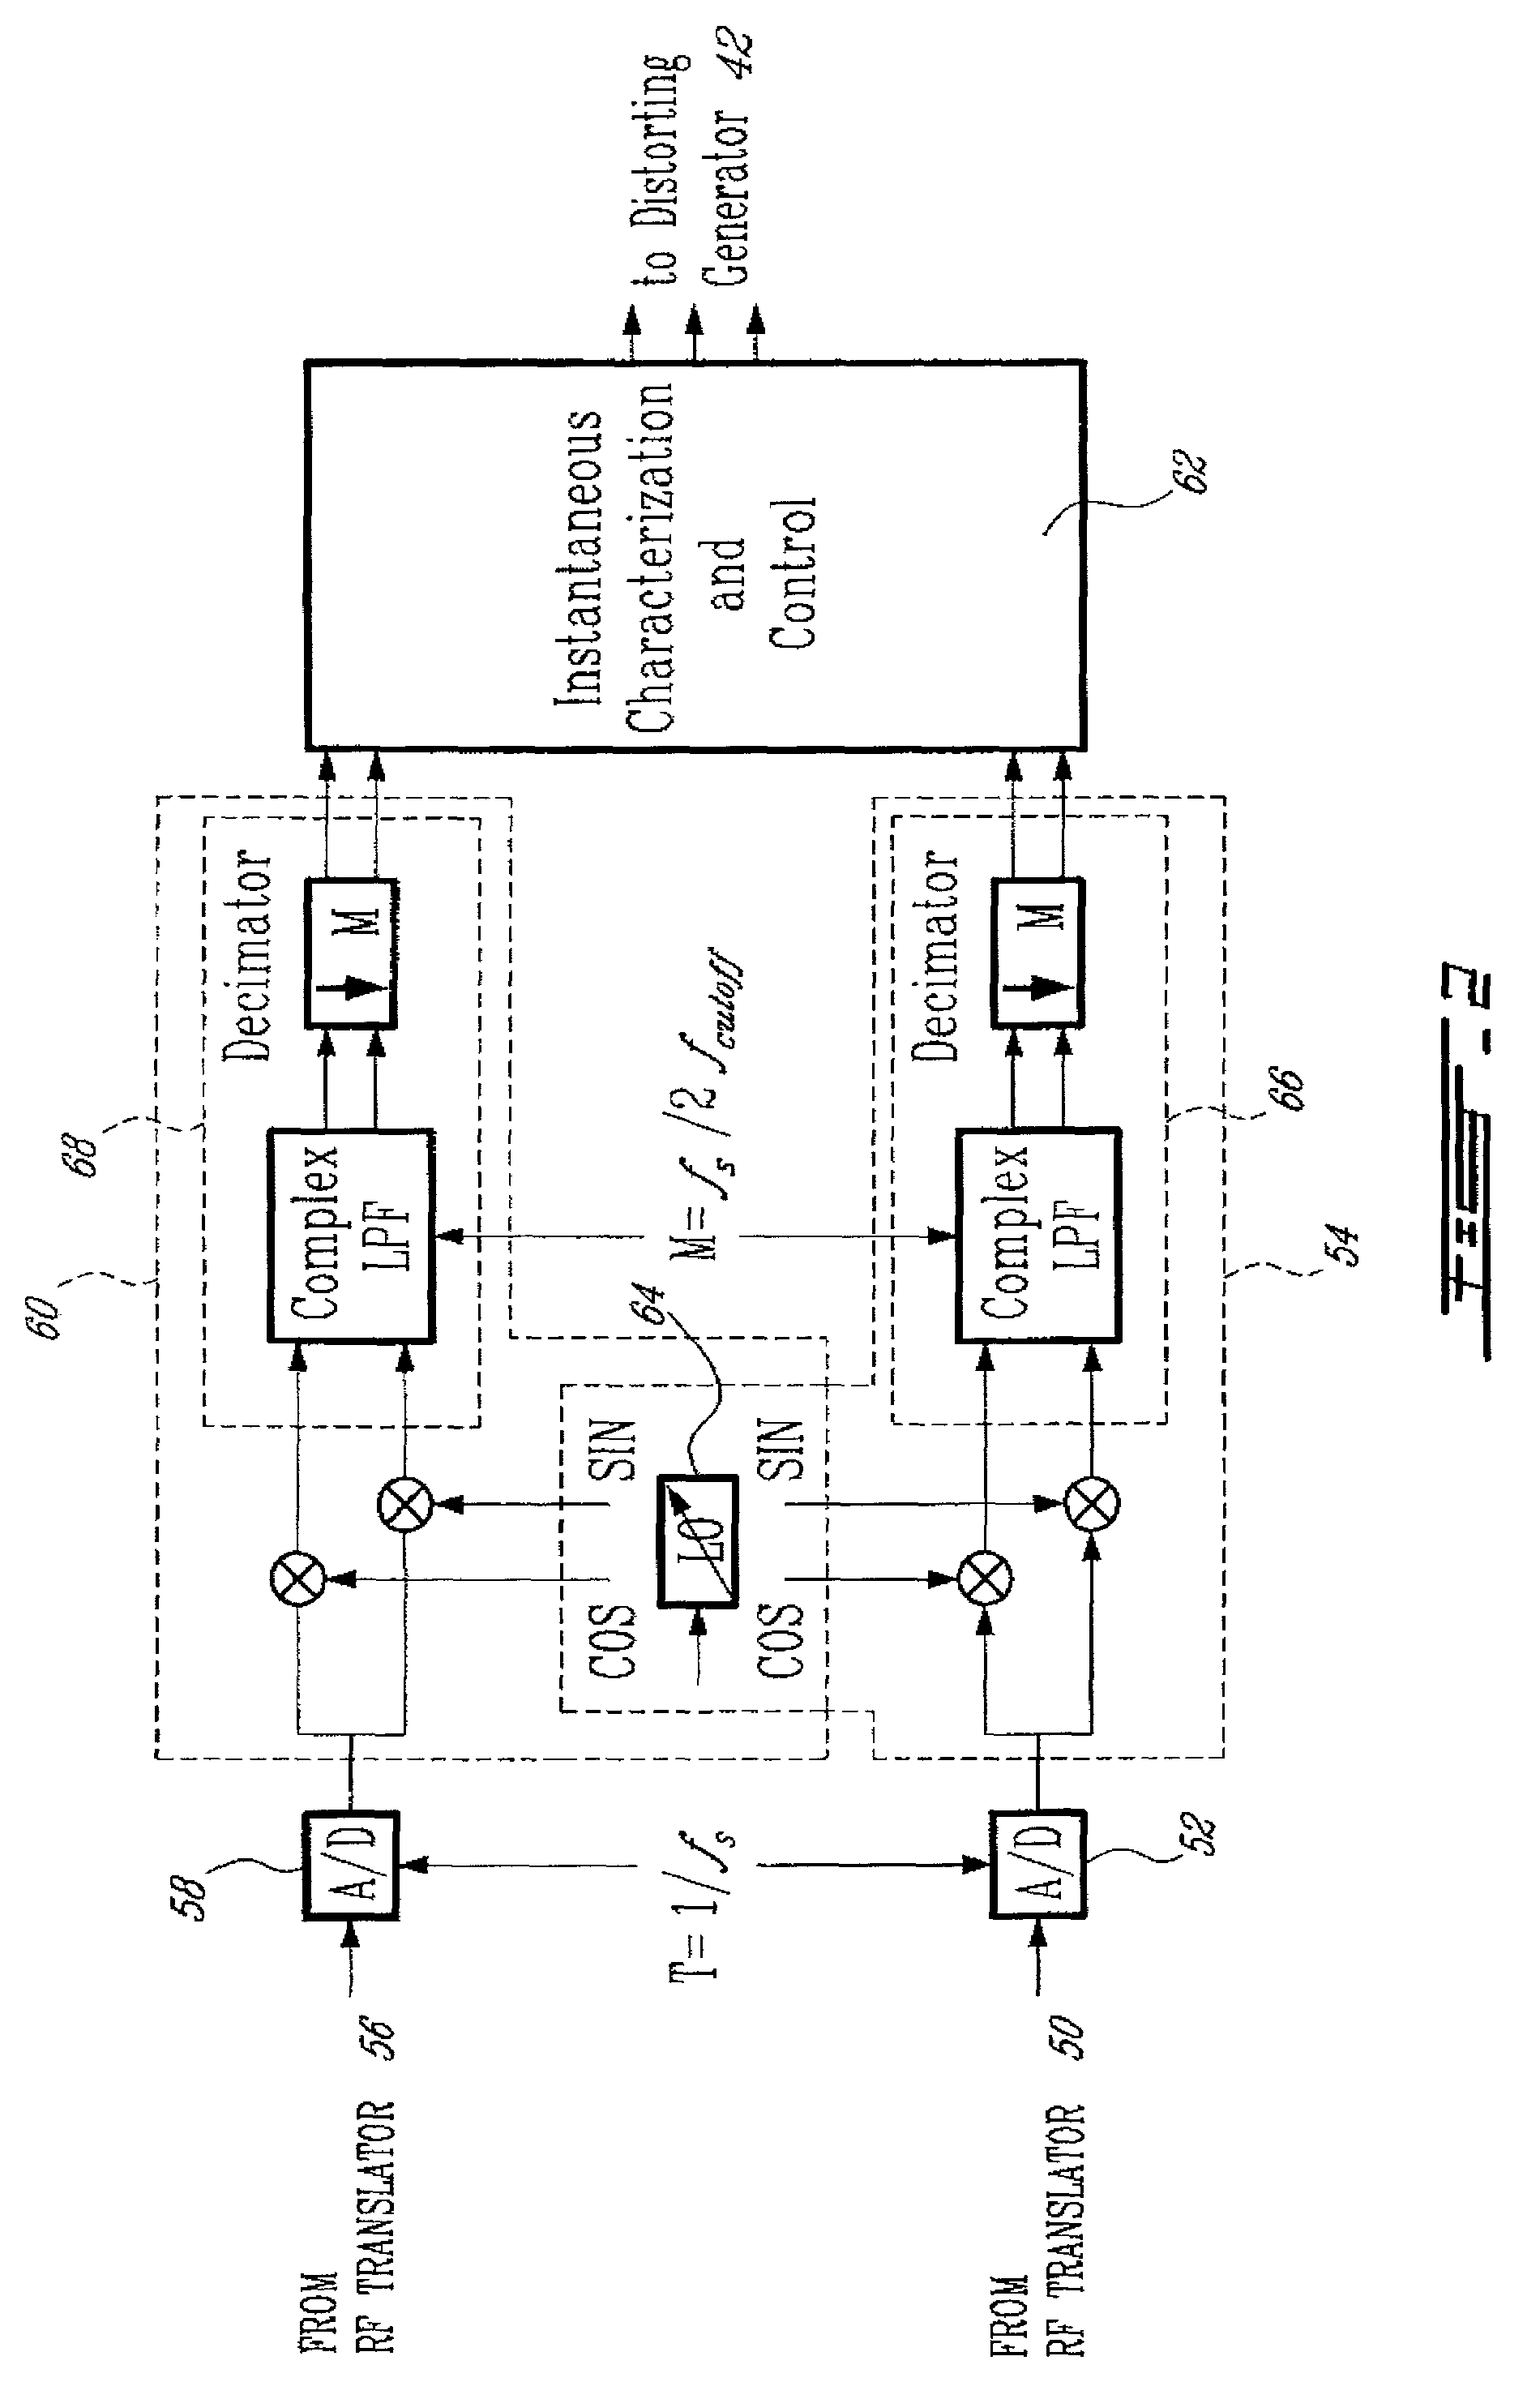 Adaptive predistortion device and method using digital receiver